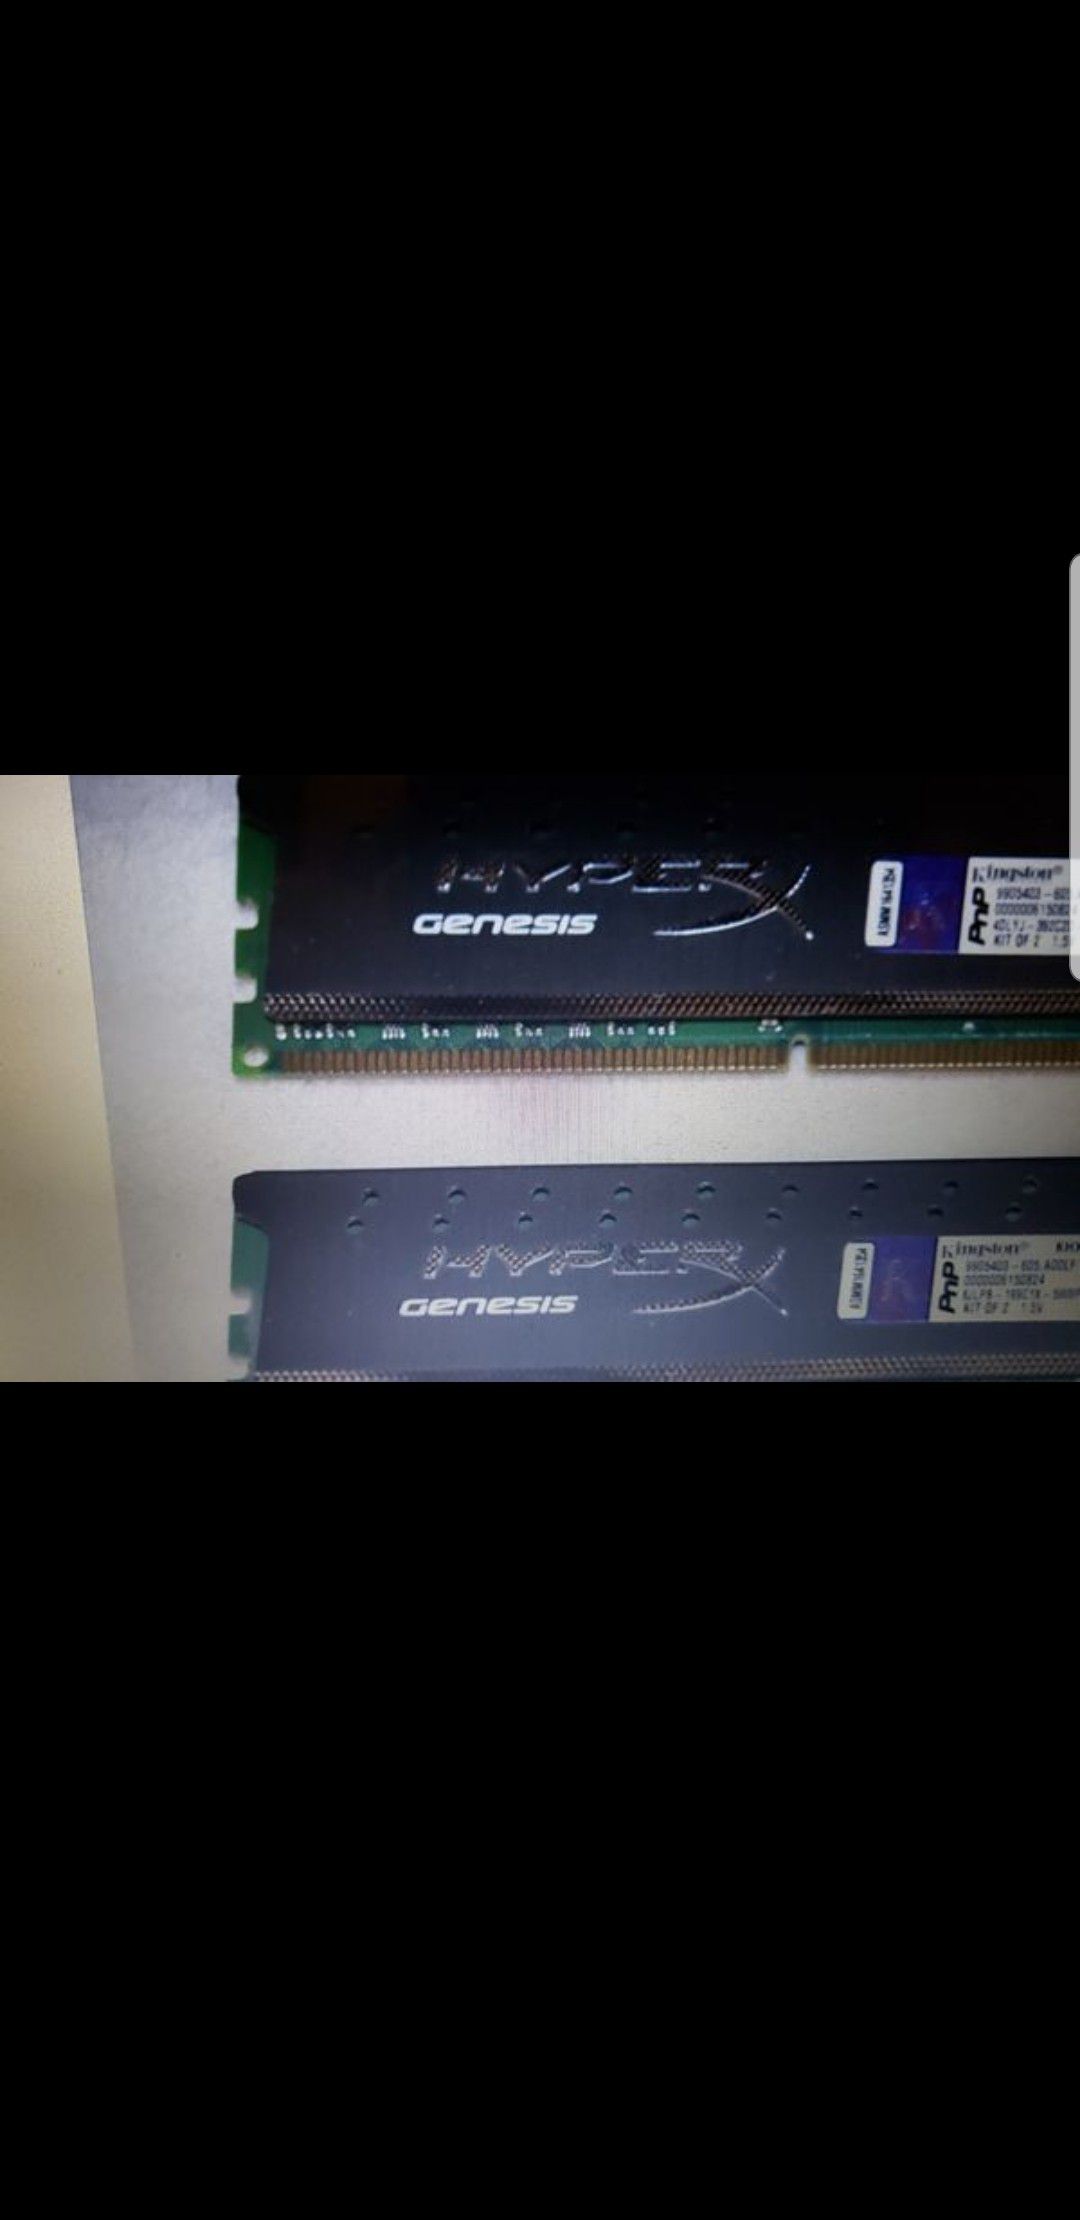 HyperX Kingston Genesis 16gb of ddr3 ram 2 x 8gb stick fast gaming ram